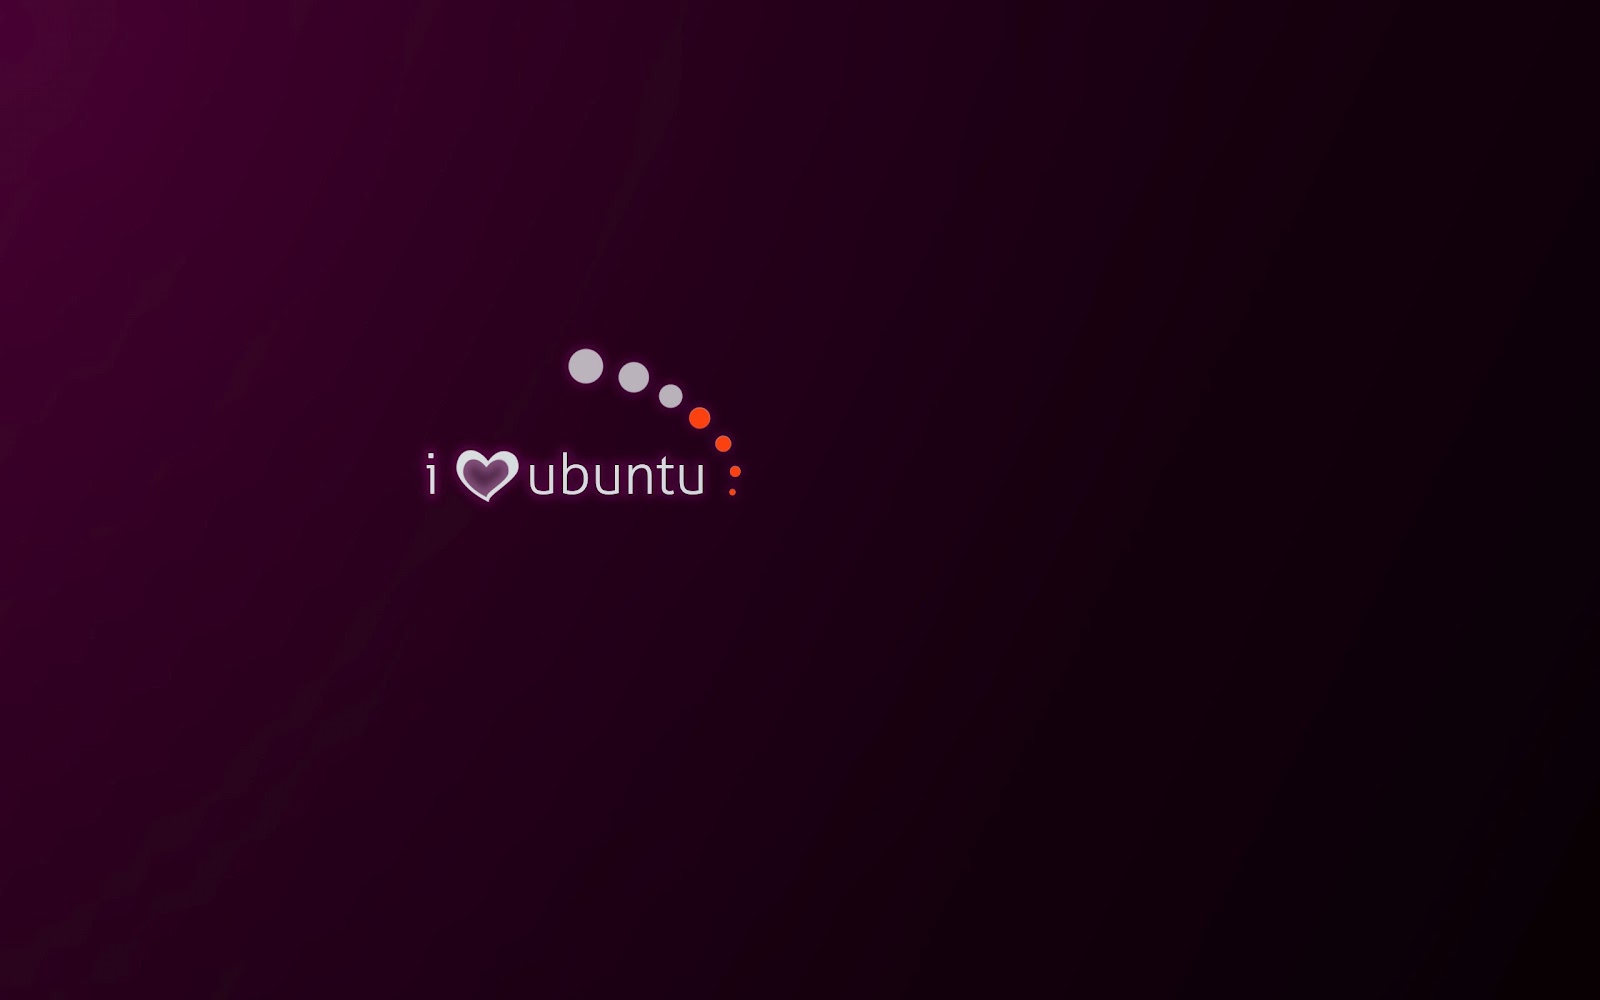 ubuntu black silver brown ubuntu wallpapers 29922 2560x1600 ubuntu 10